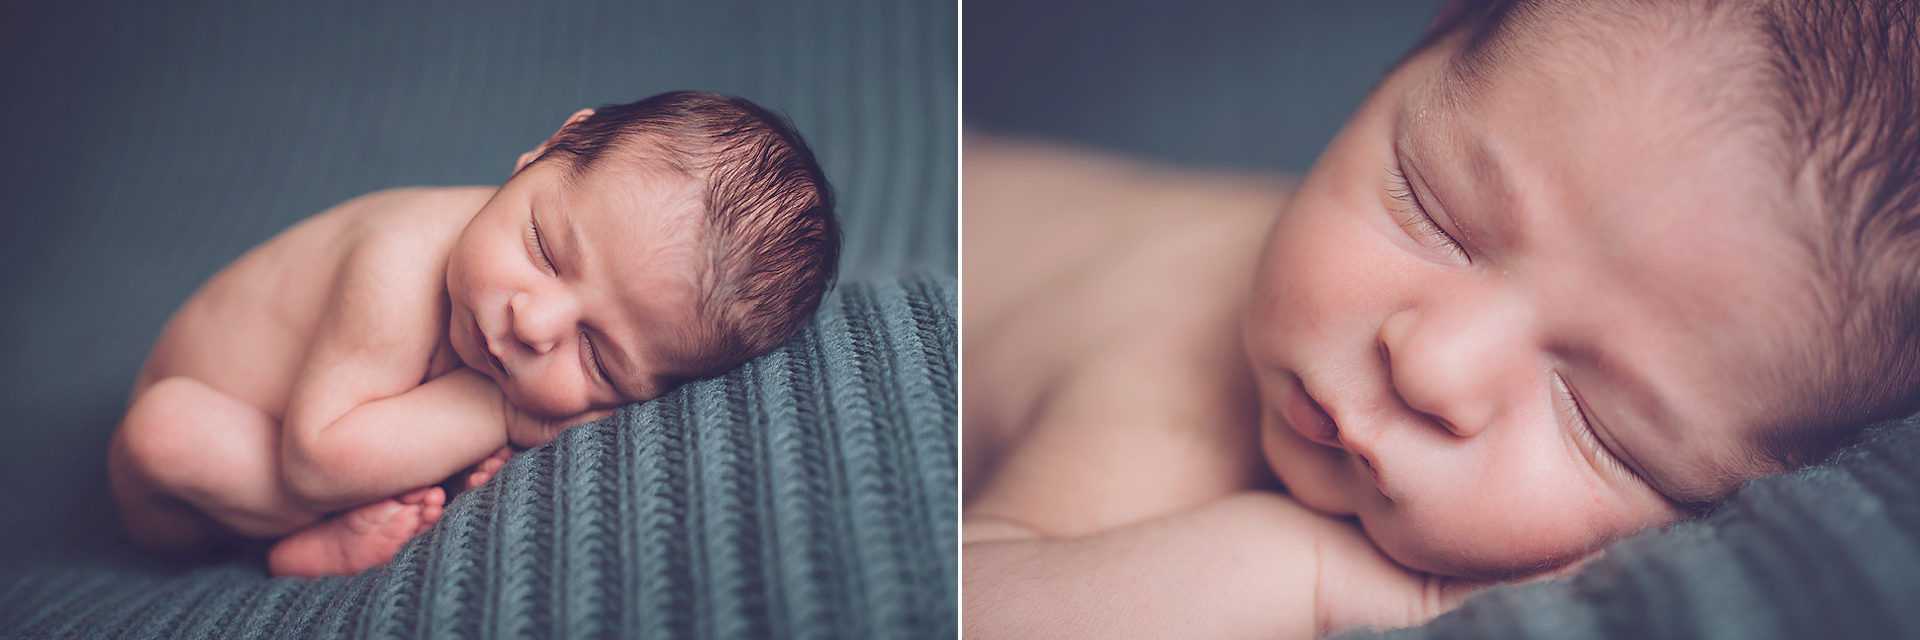 Washington, DC newborn photographer | Tonya Teran Photography - newborn and toddler sibling